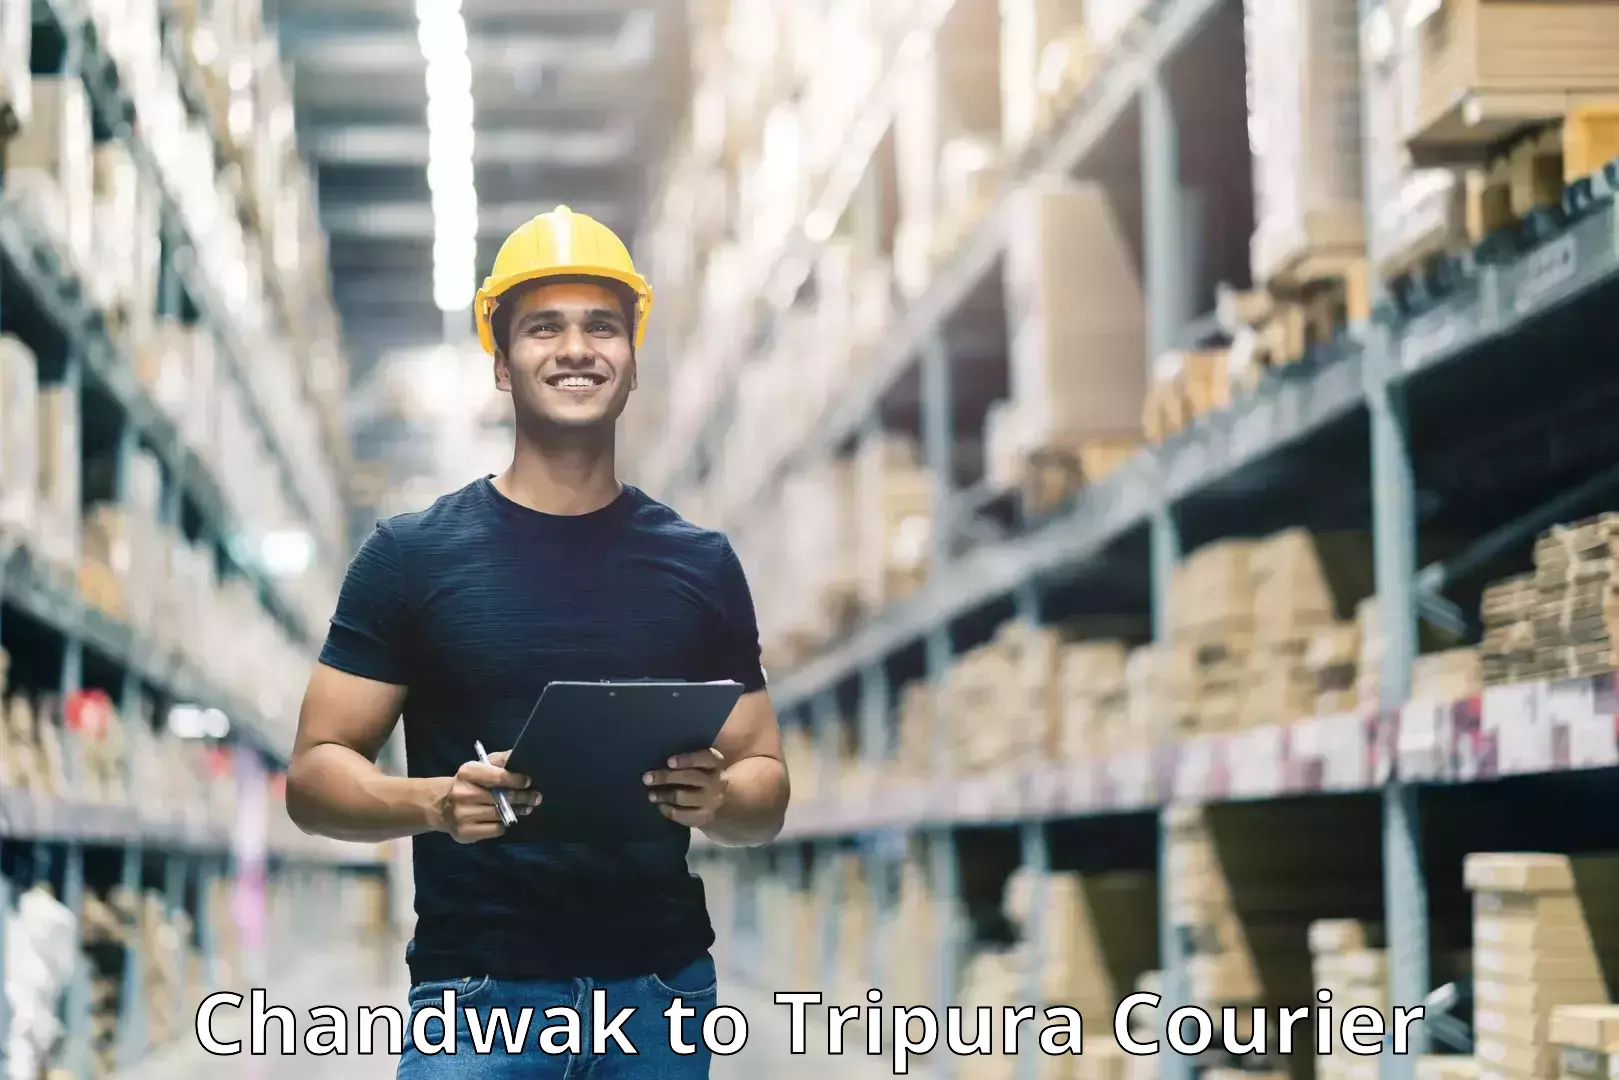 Courier service comparison Chandwak to Manughat